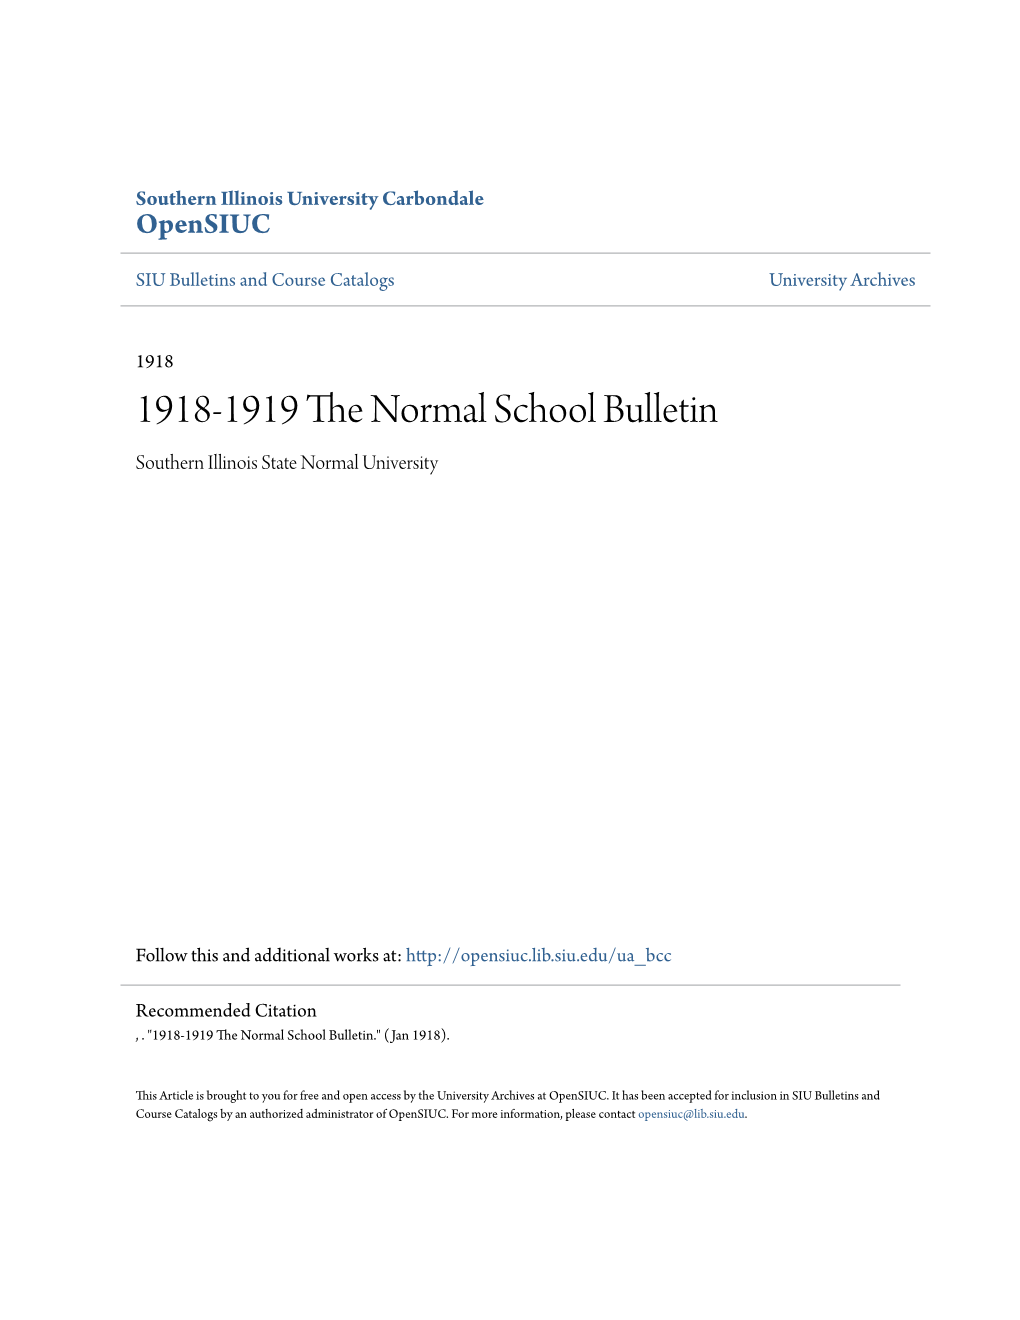 1918-1919 the Normal School Bulletin